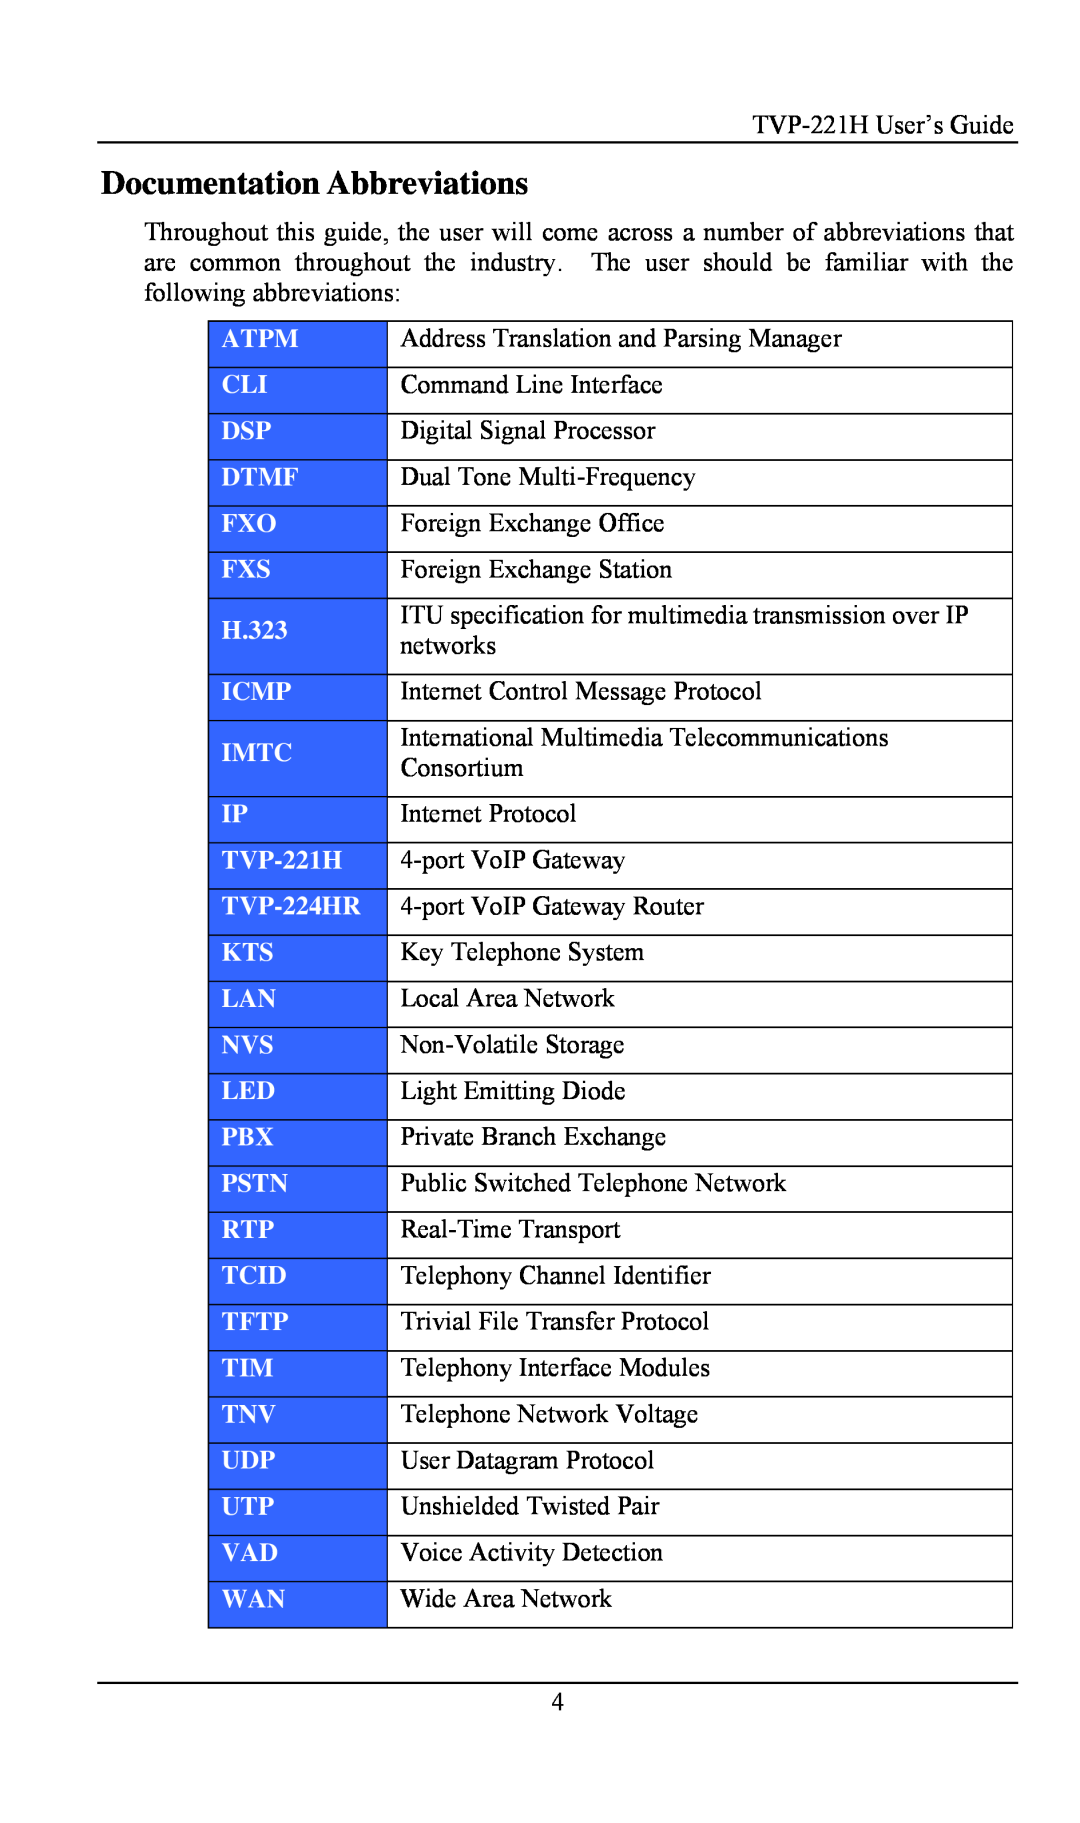 TRENDnet TVP- 221H manual Documentation Abbreviations, Atpm, Dtmf, H.323, Icmp, Imtc, TVP-221H, TVP-224HR, Pstn, Tcid, Tftp 